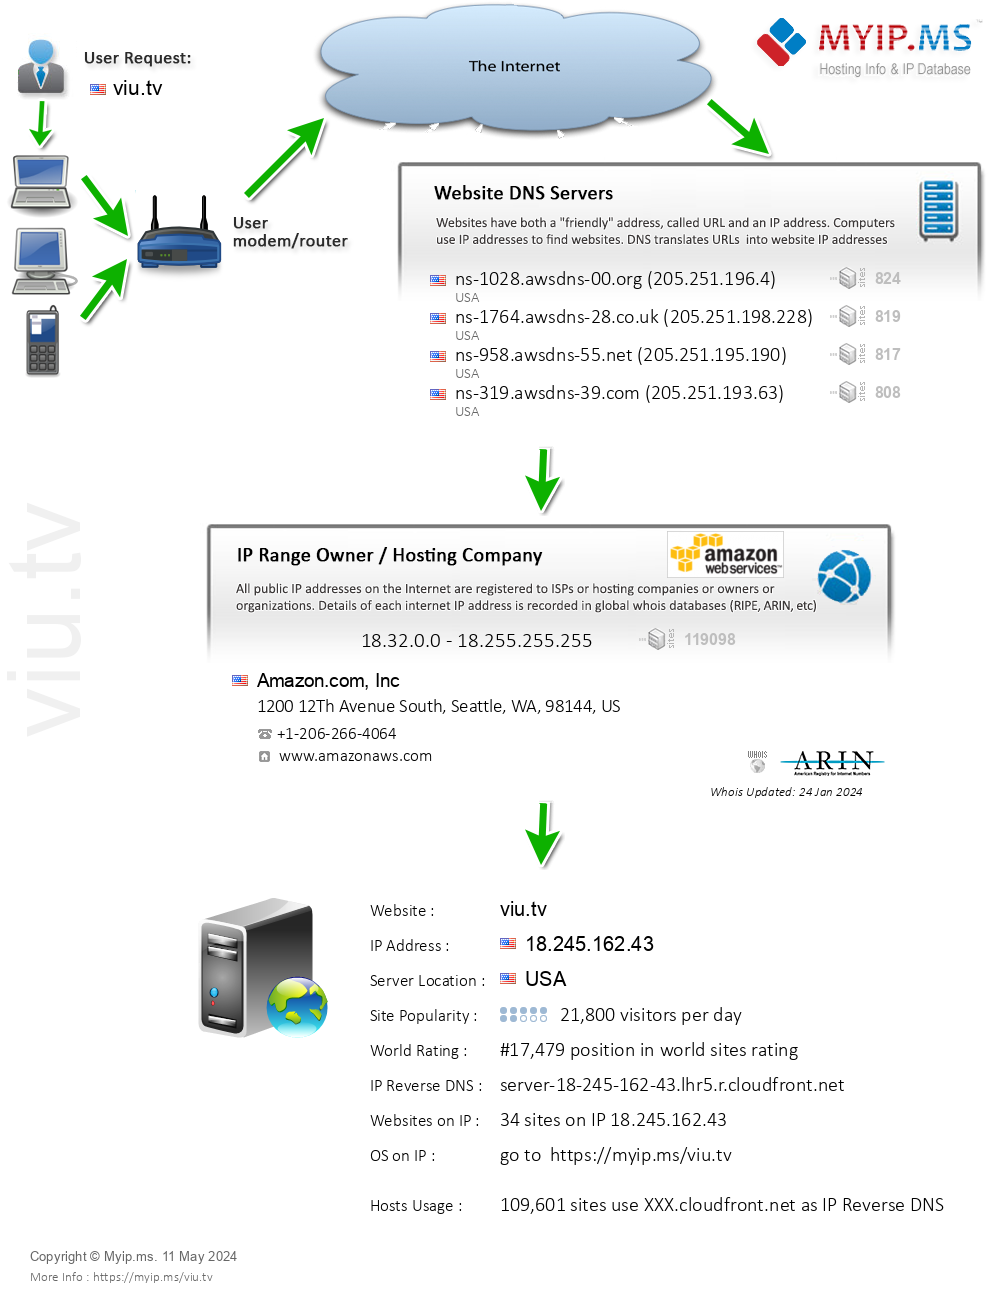 Viu.tv - Website Hosting Visual IP Diagram